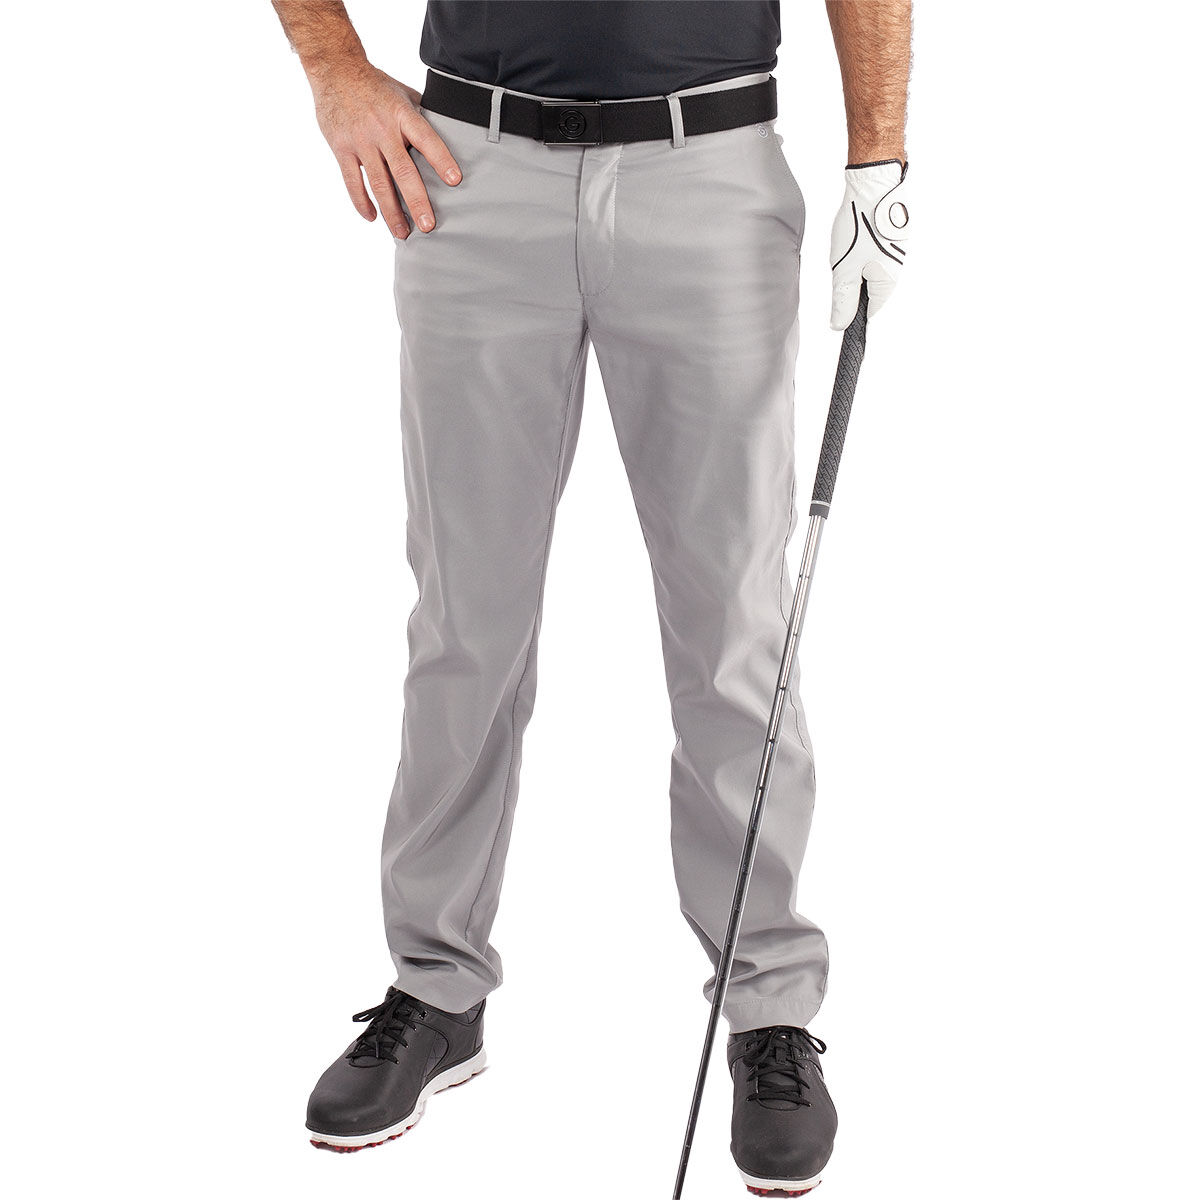 Galvin Green Men’s Nixon Golf Trousers, Mens, Light grey, 30, Regular | American Golf